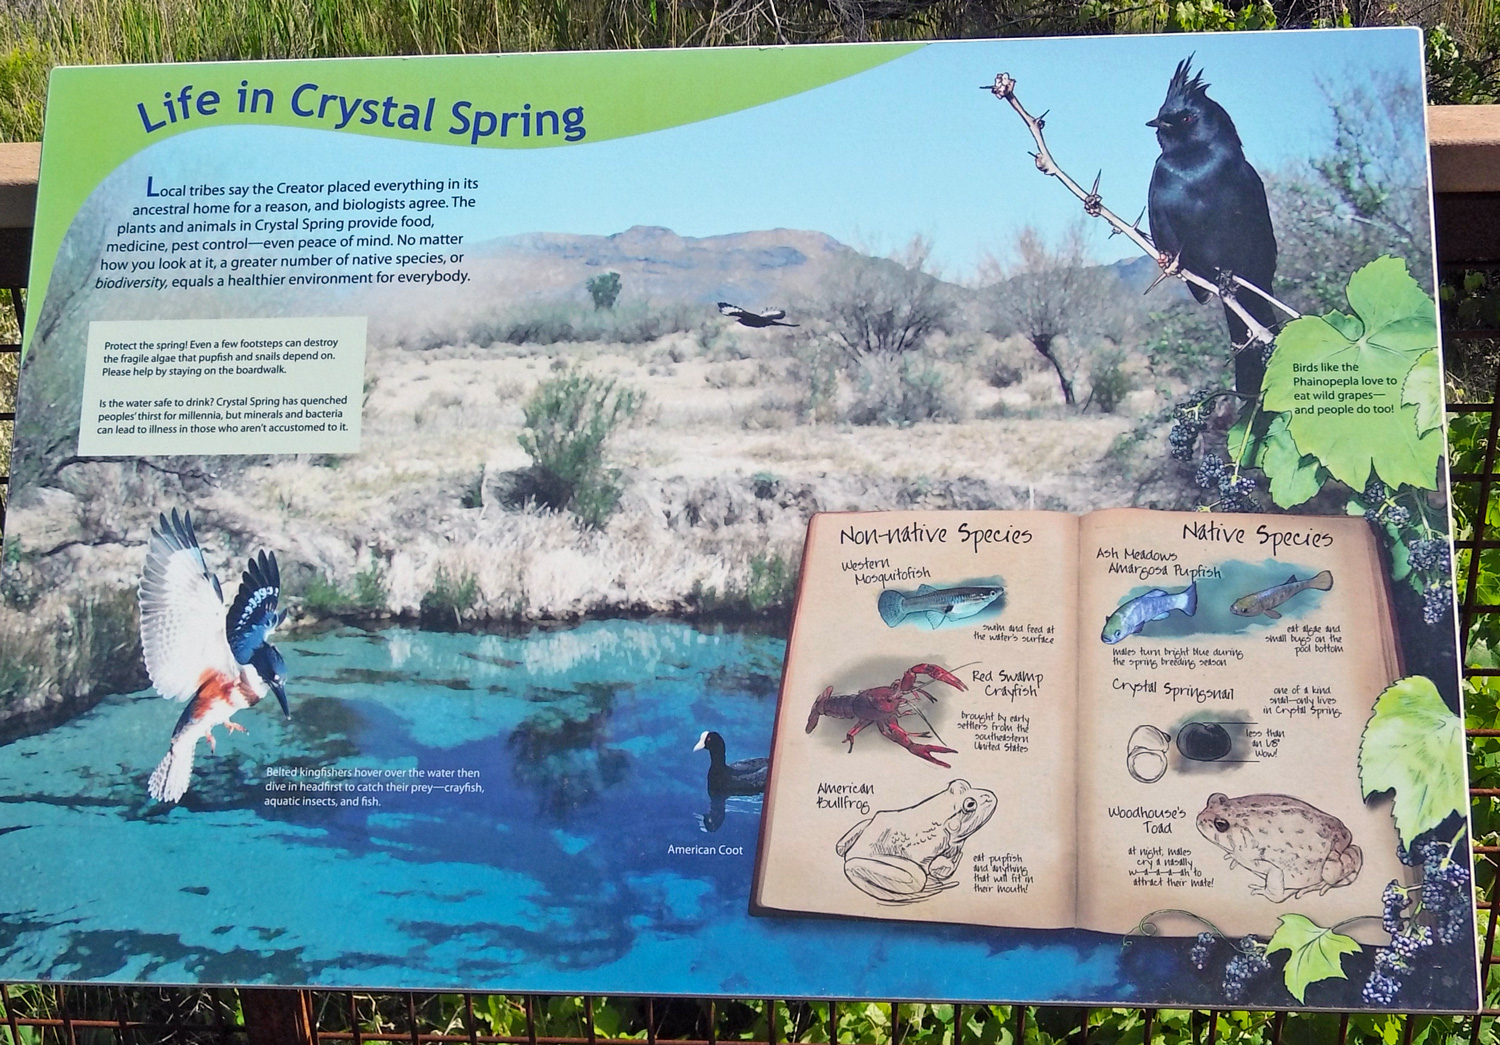 sign describing Life in Crystal Spring